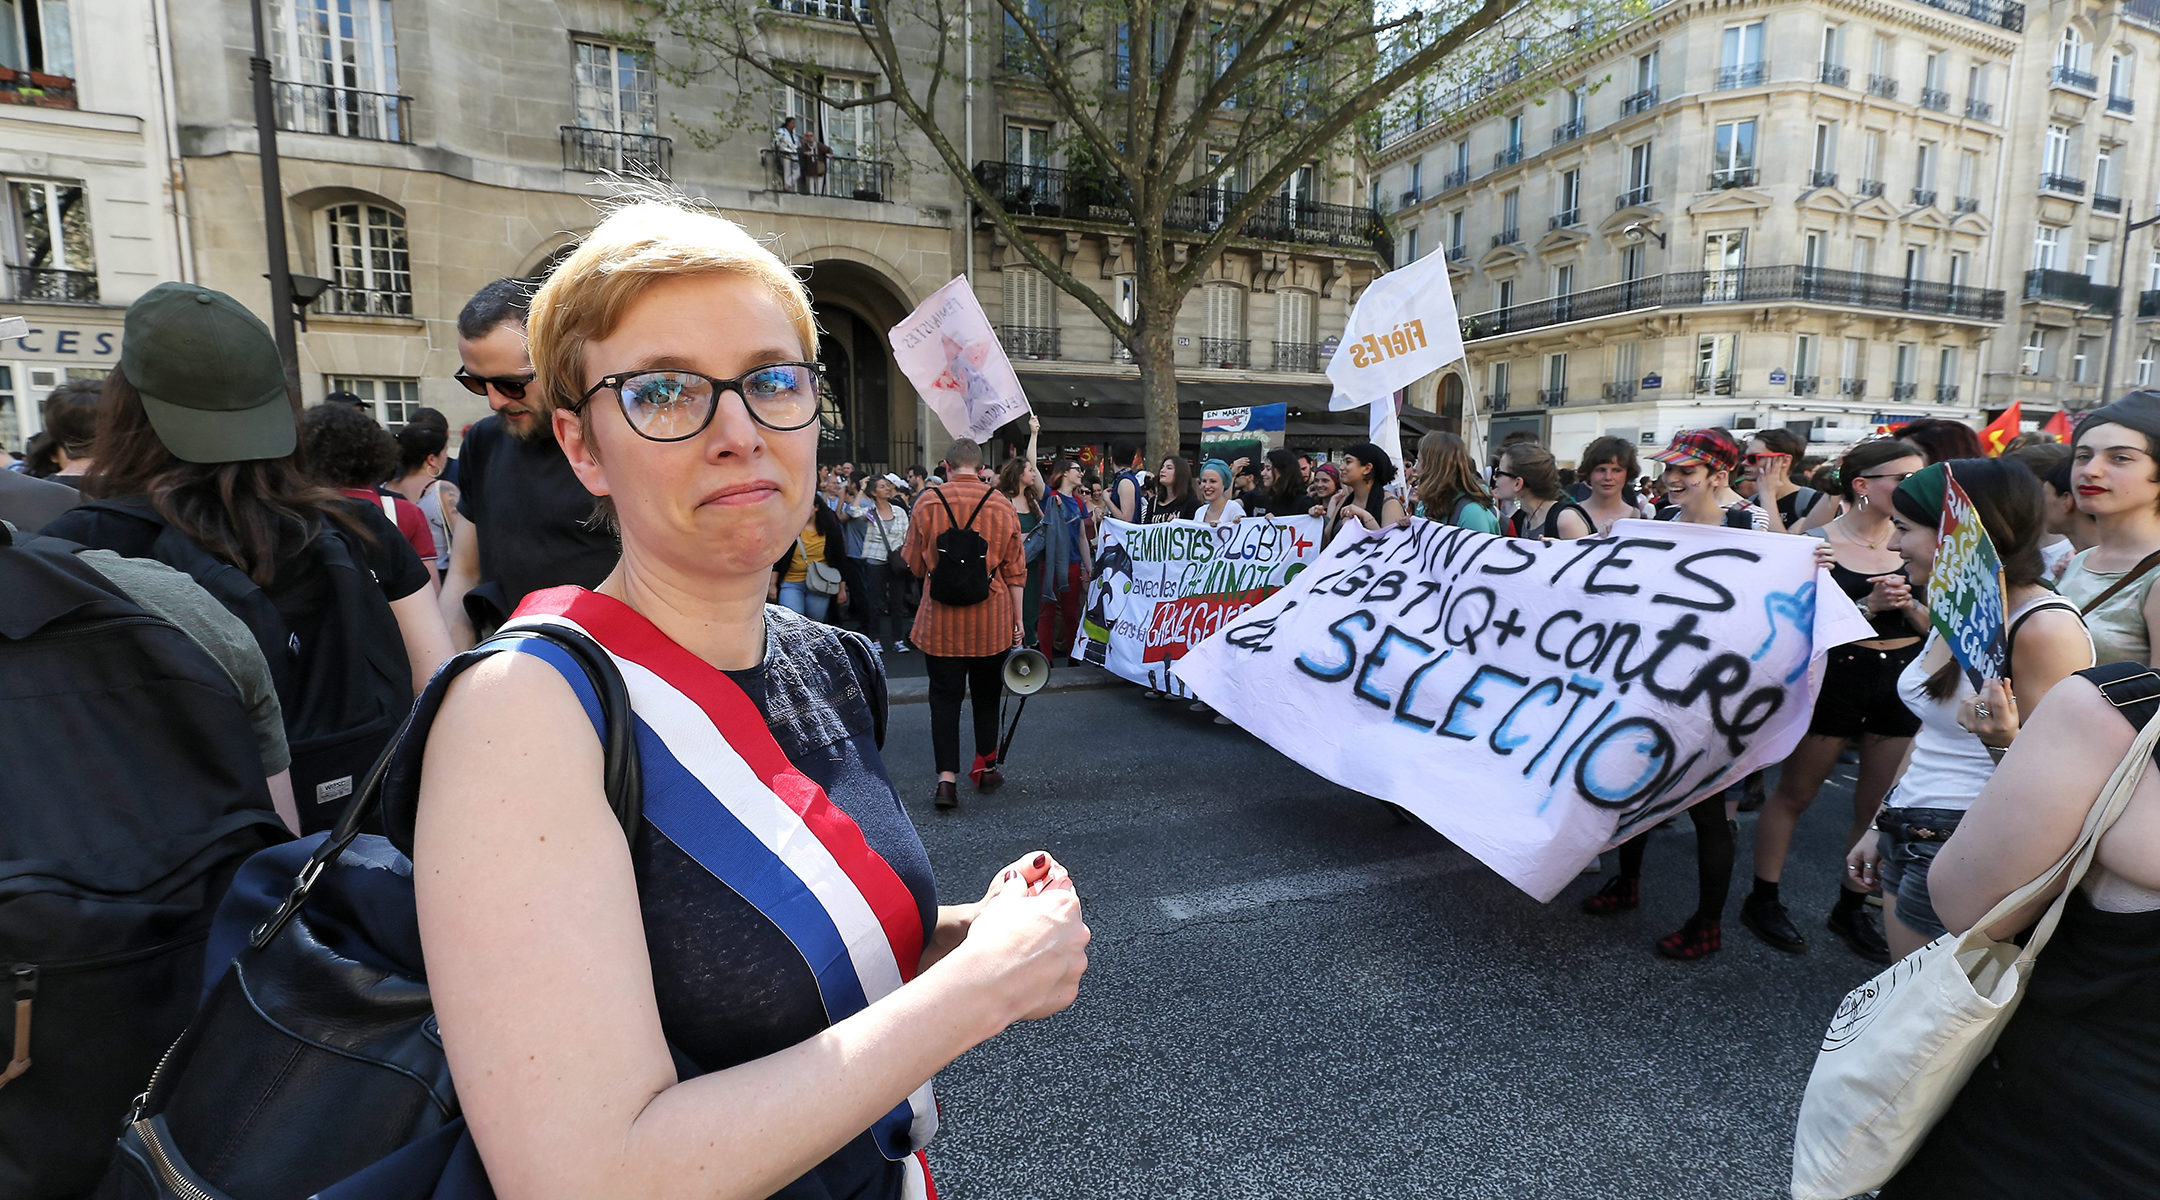 French lawmaker Clementine Autain participating at a demonstration in Paris, France on April 19, 2018. (Michel Stoupak/NurPhoto via Getty Images)